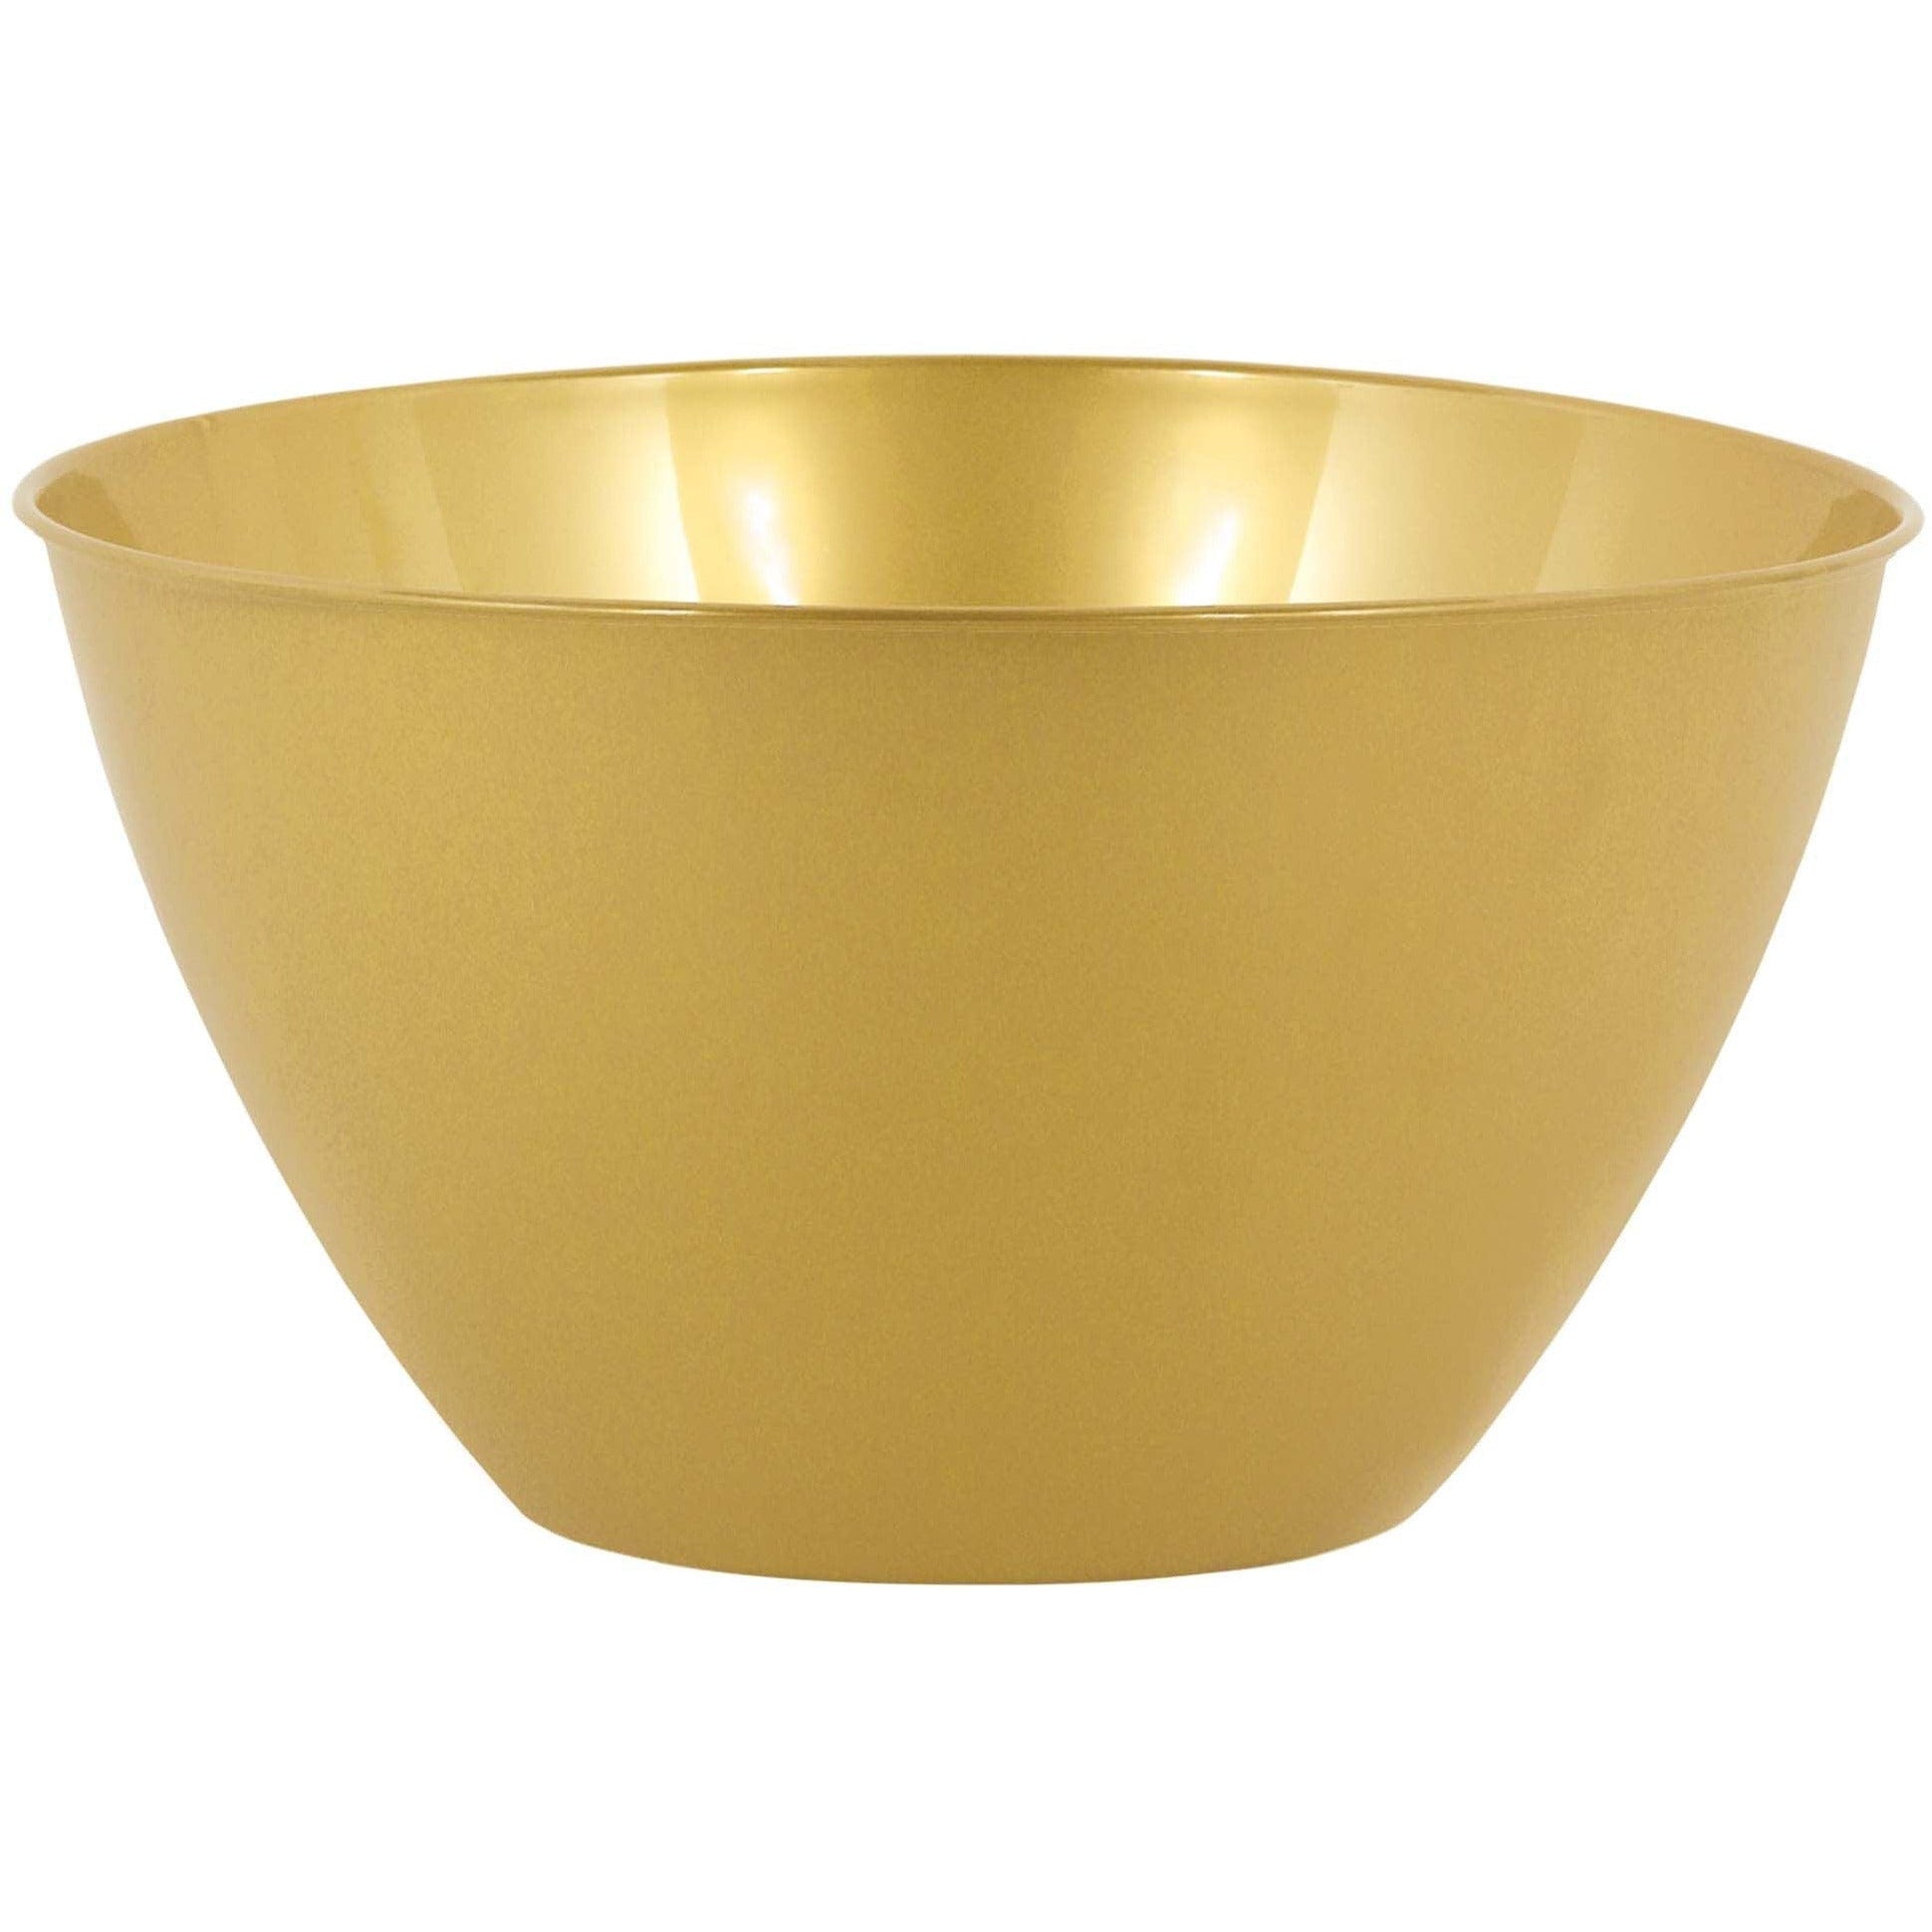 Amscan Small Gold Plastic Bowl